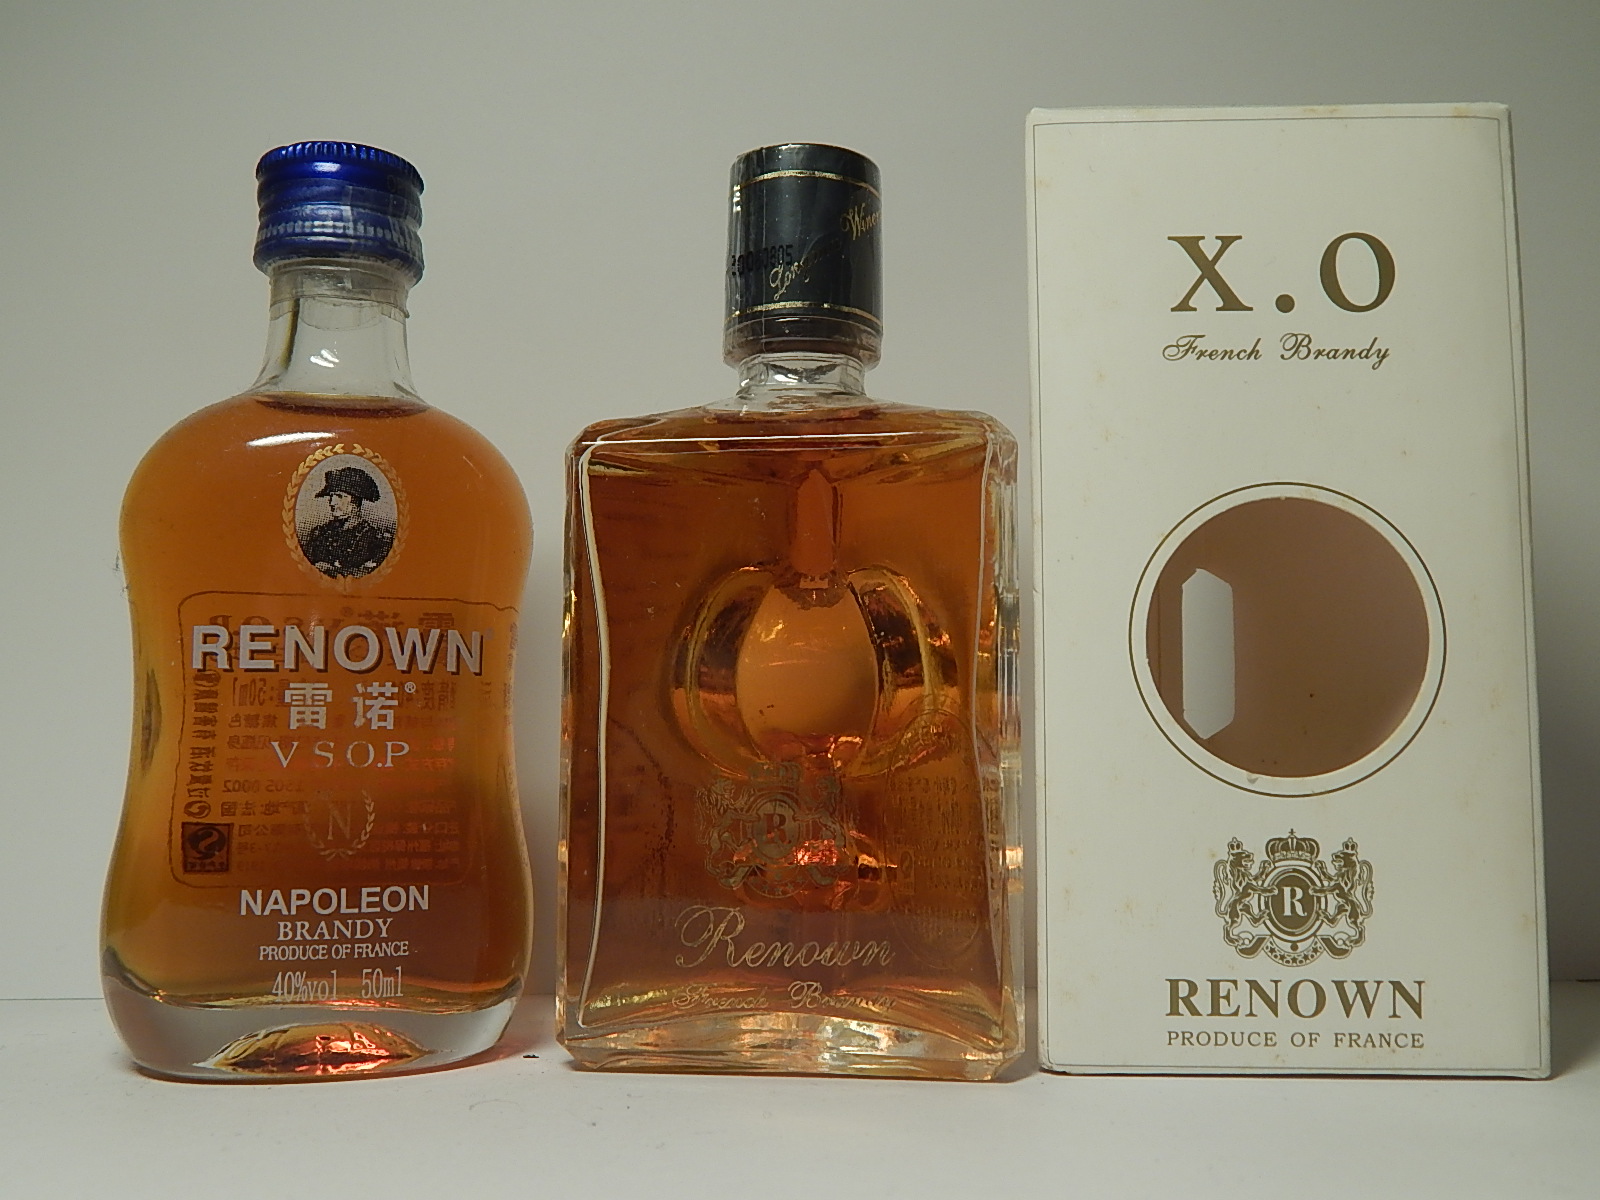 RENOWN Napoleon - XO Cognac "Taiwan"